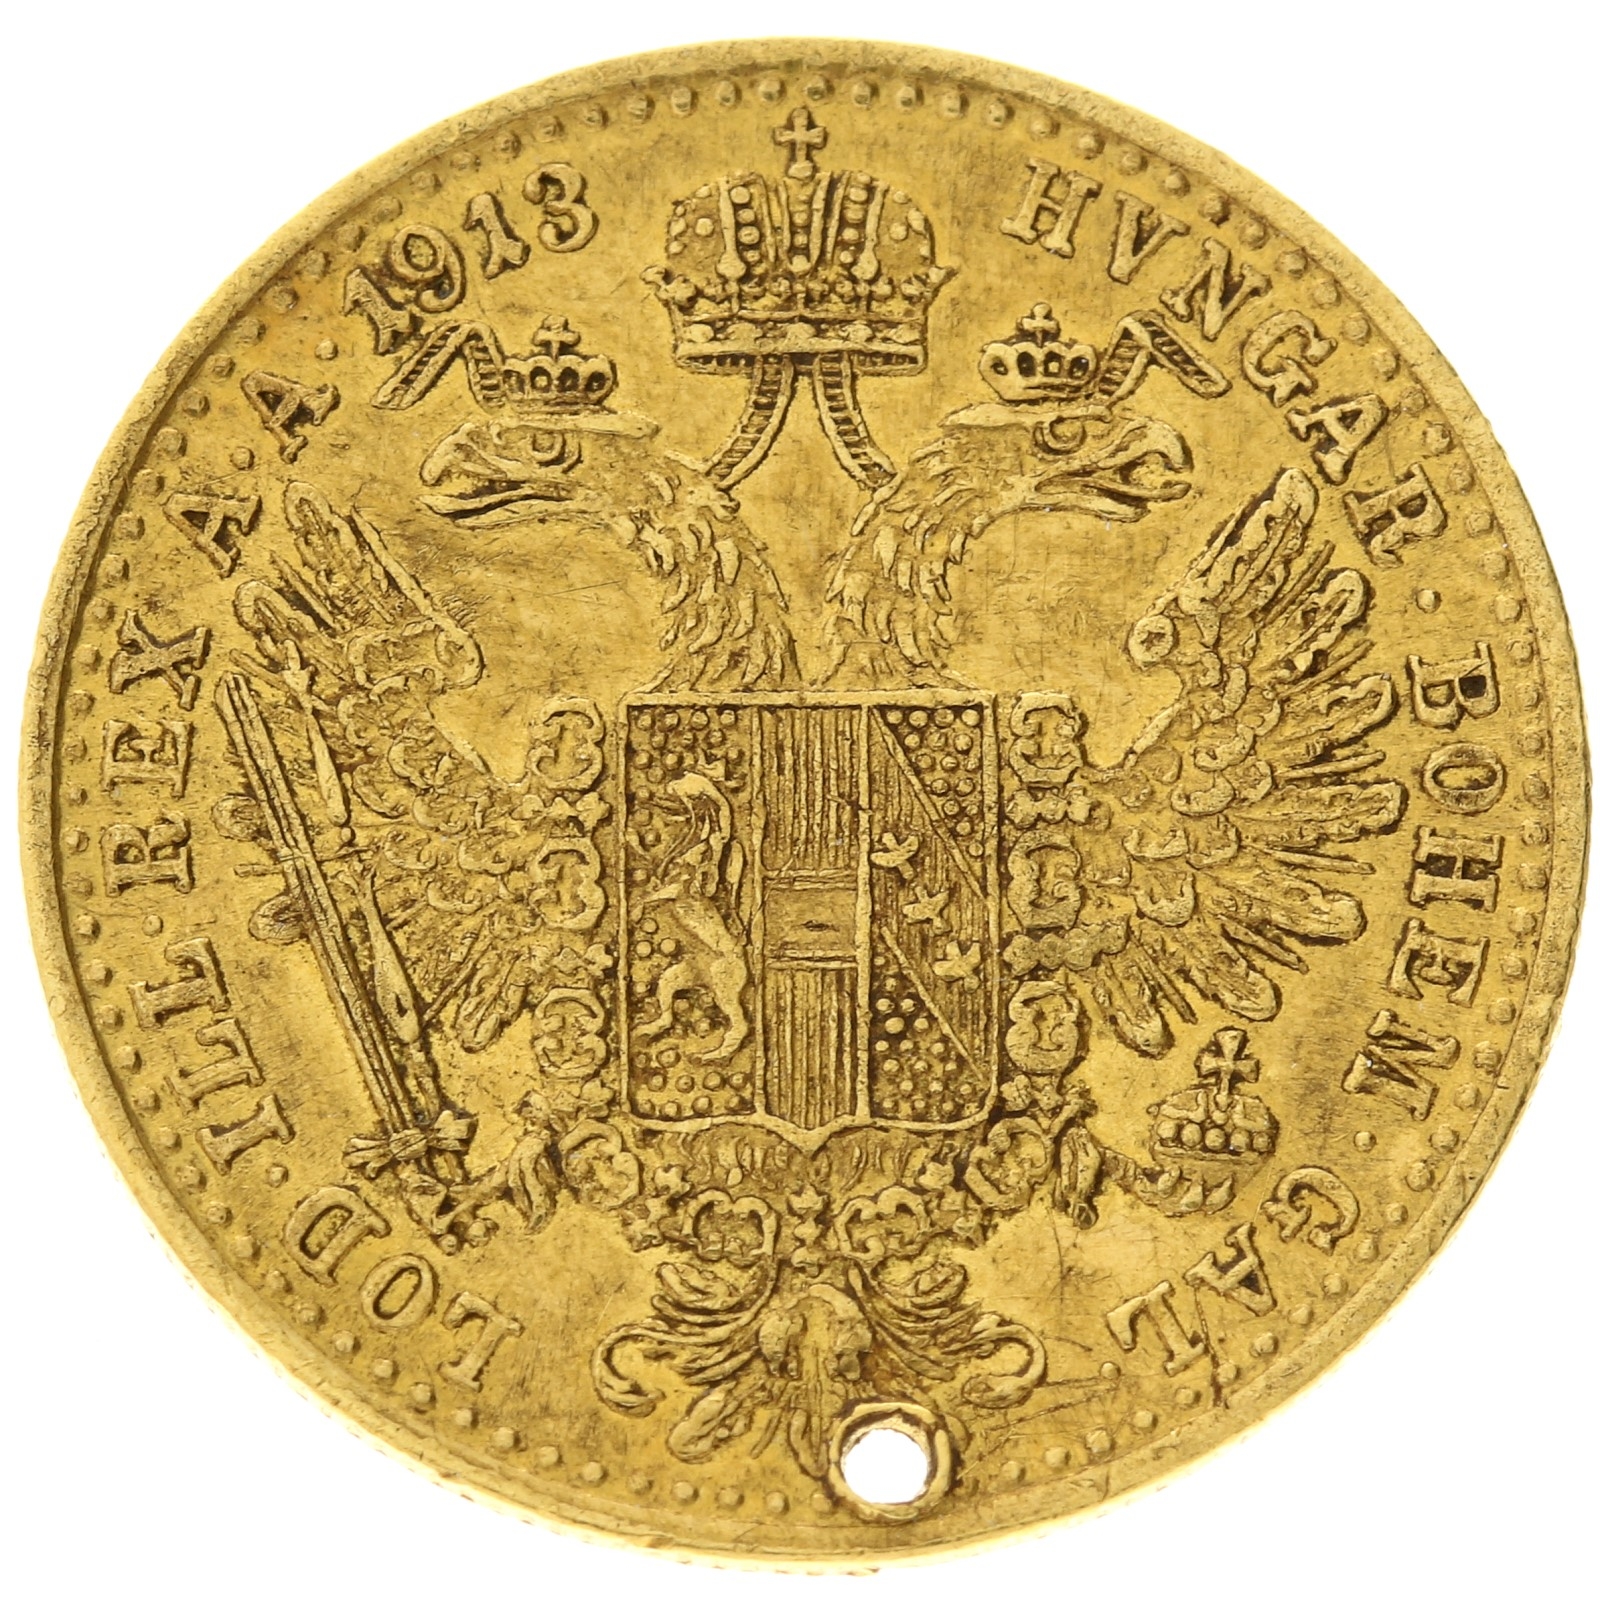 Austria - 1 ducat - 1913 - Franz Joseph I 